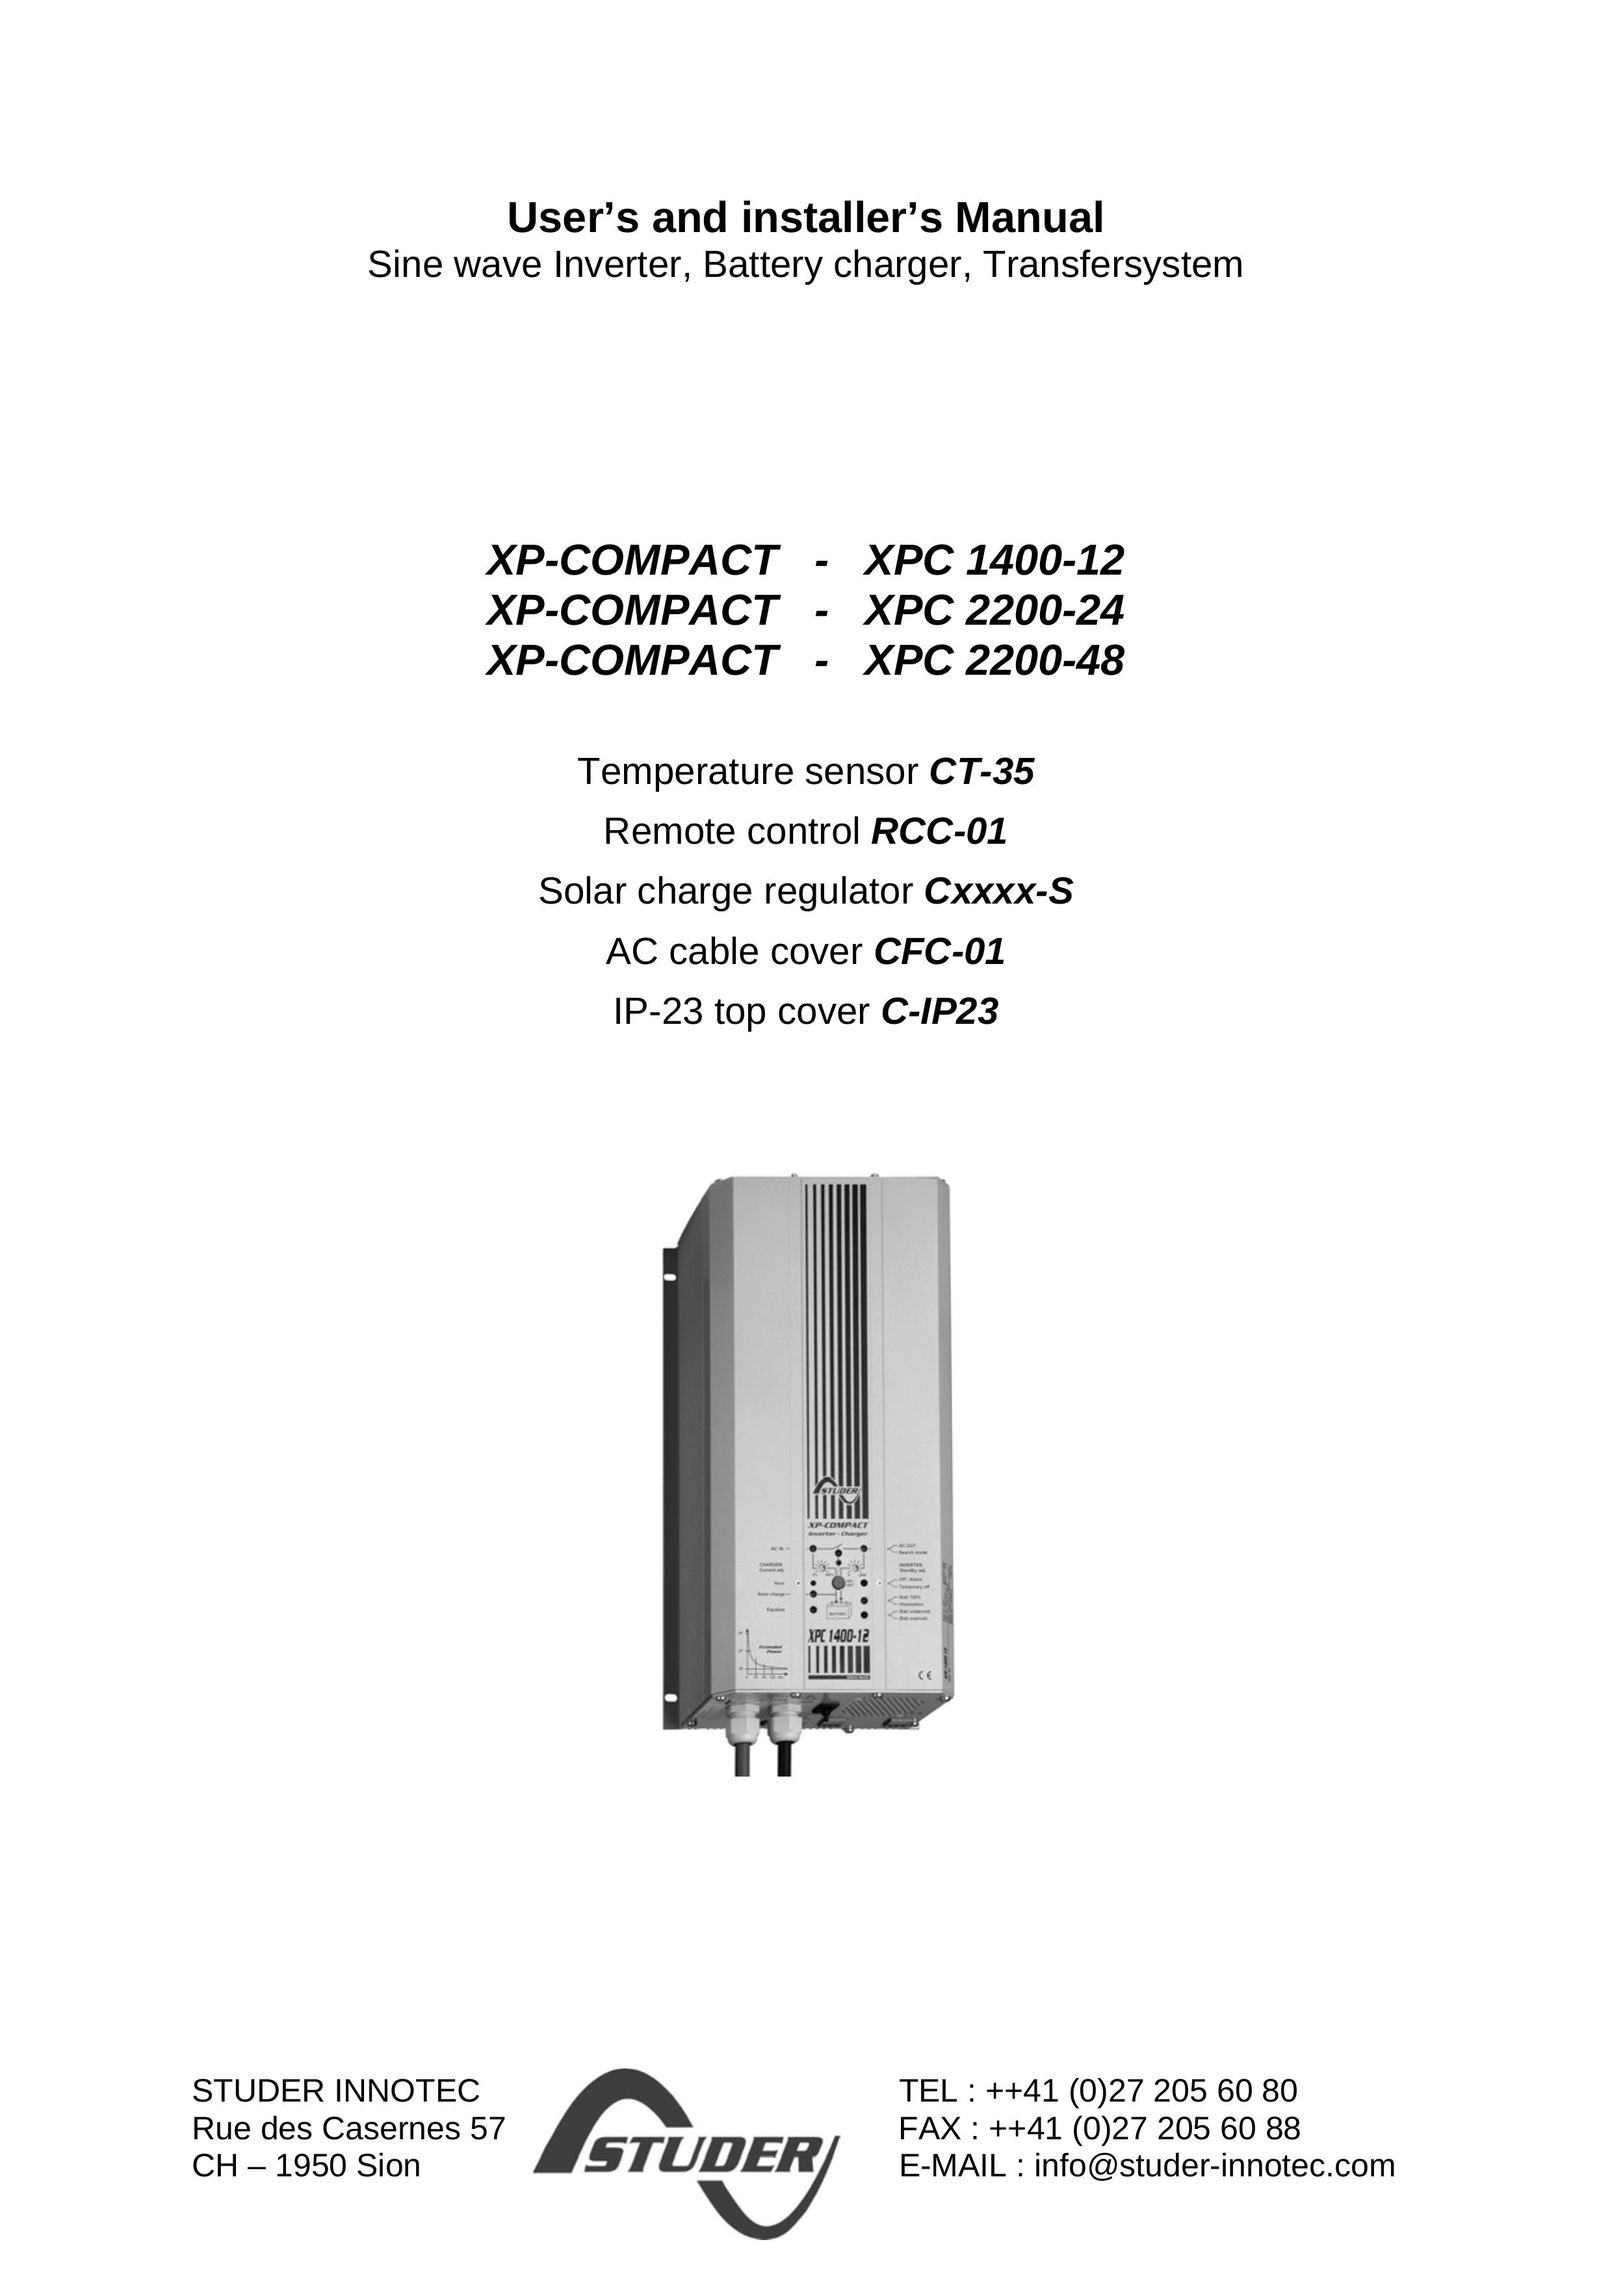 Studer Innotec RCC-01 Battery Charger User Manual